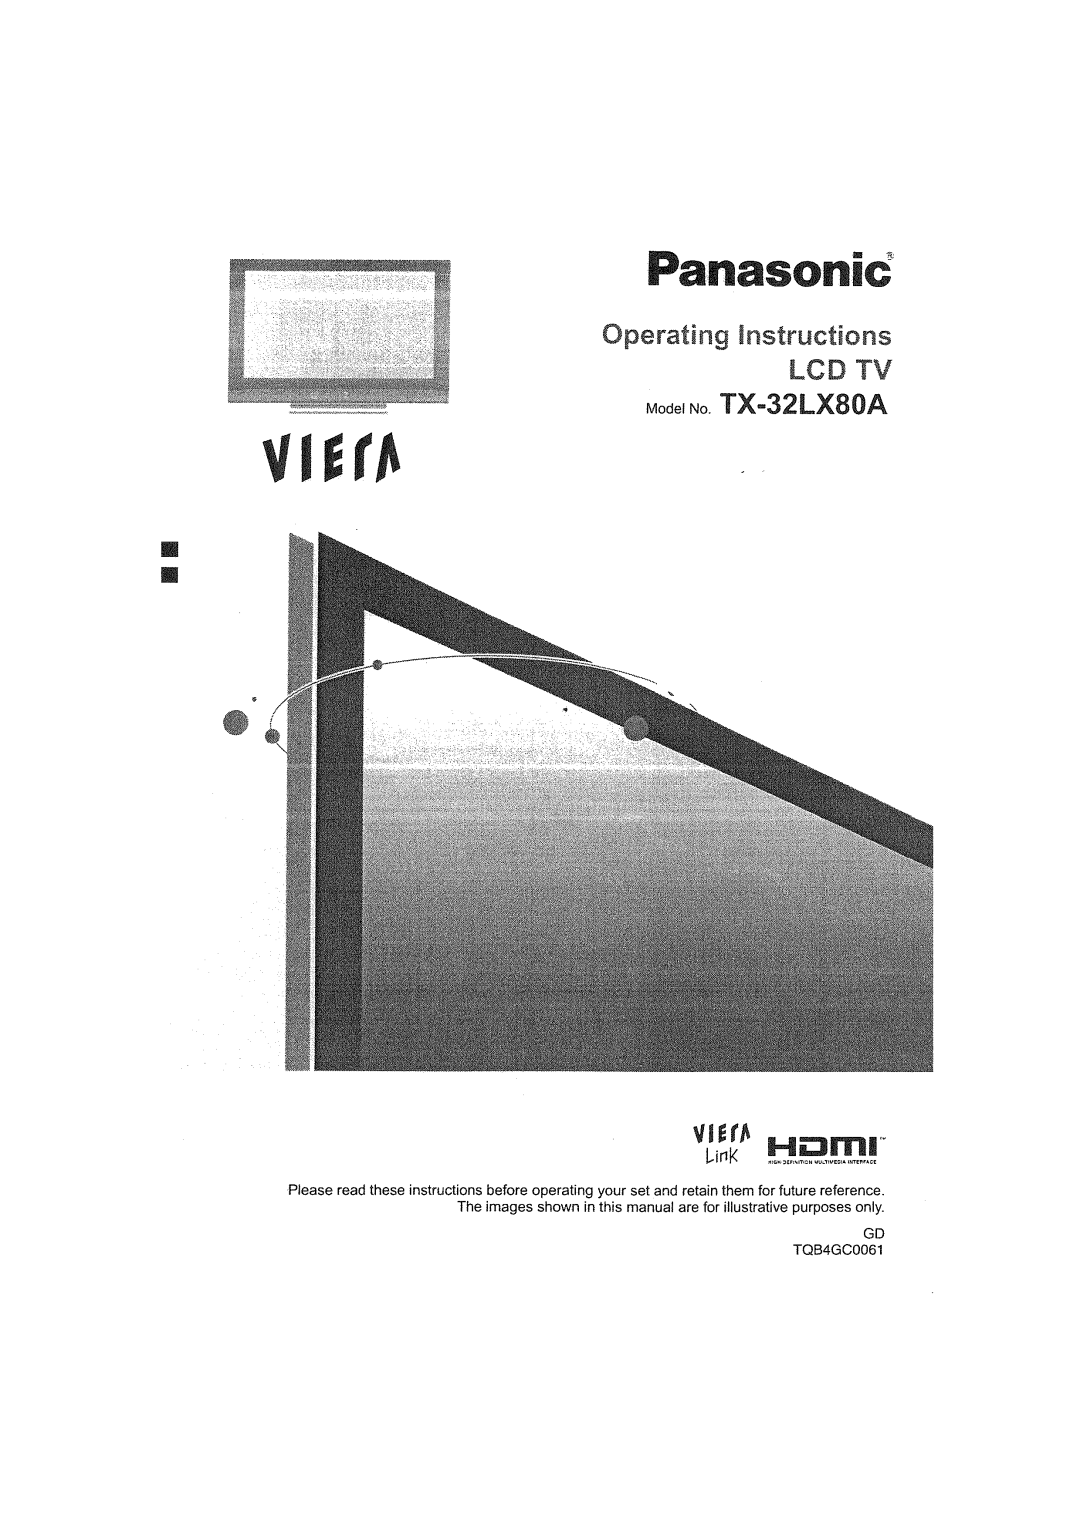 Panasonic TX32LX80 manual Lcd Tv, vWaRlIrA HE3m1, OperatingInstructions, Viva, Panasonic 